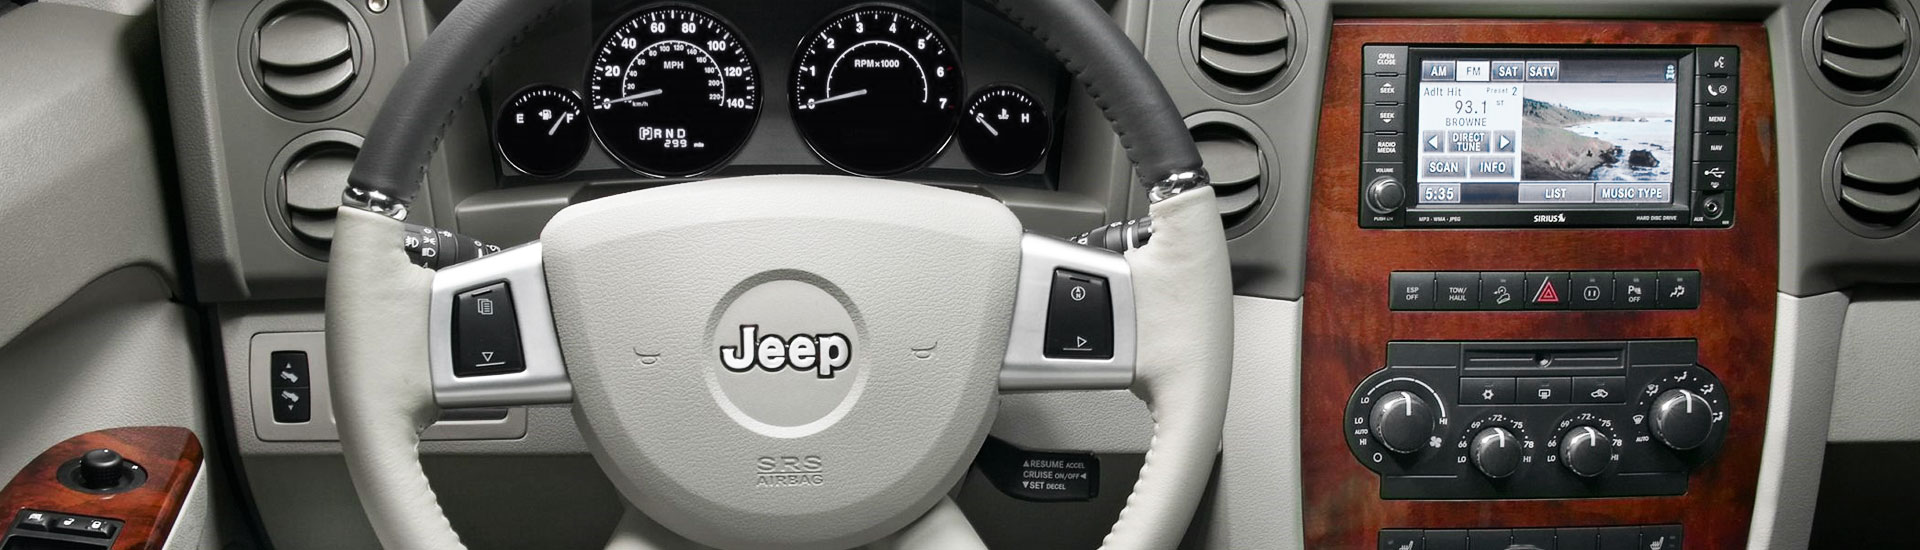 2019 Jeep Cherokee Custom Dash Kits